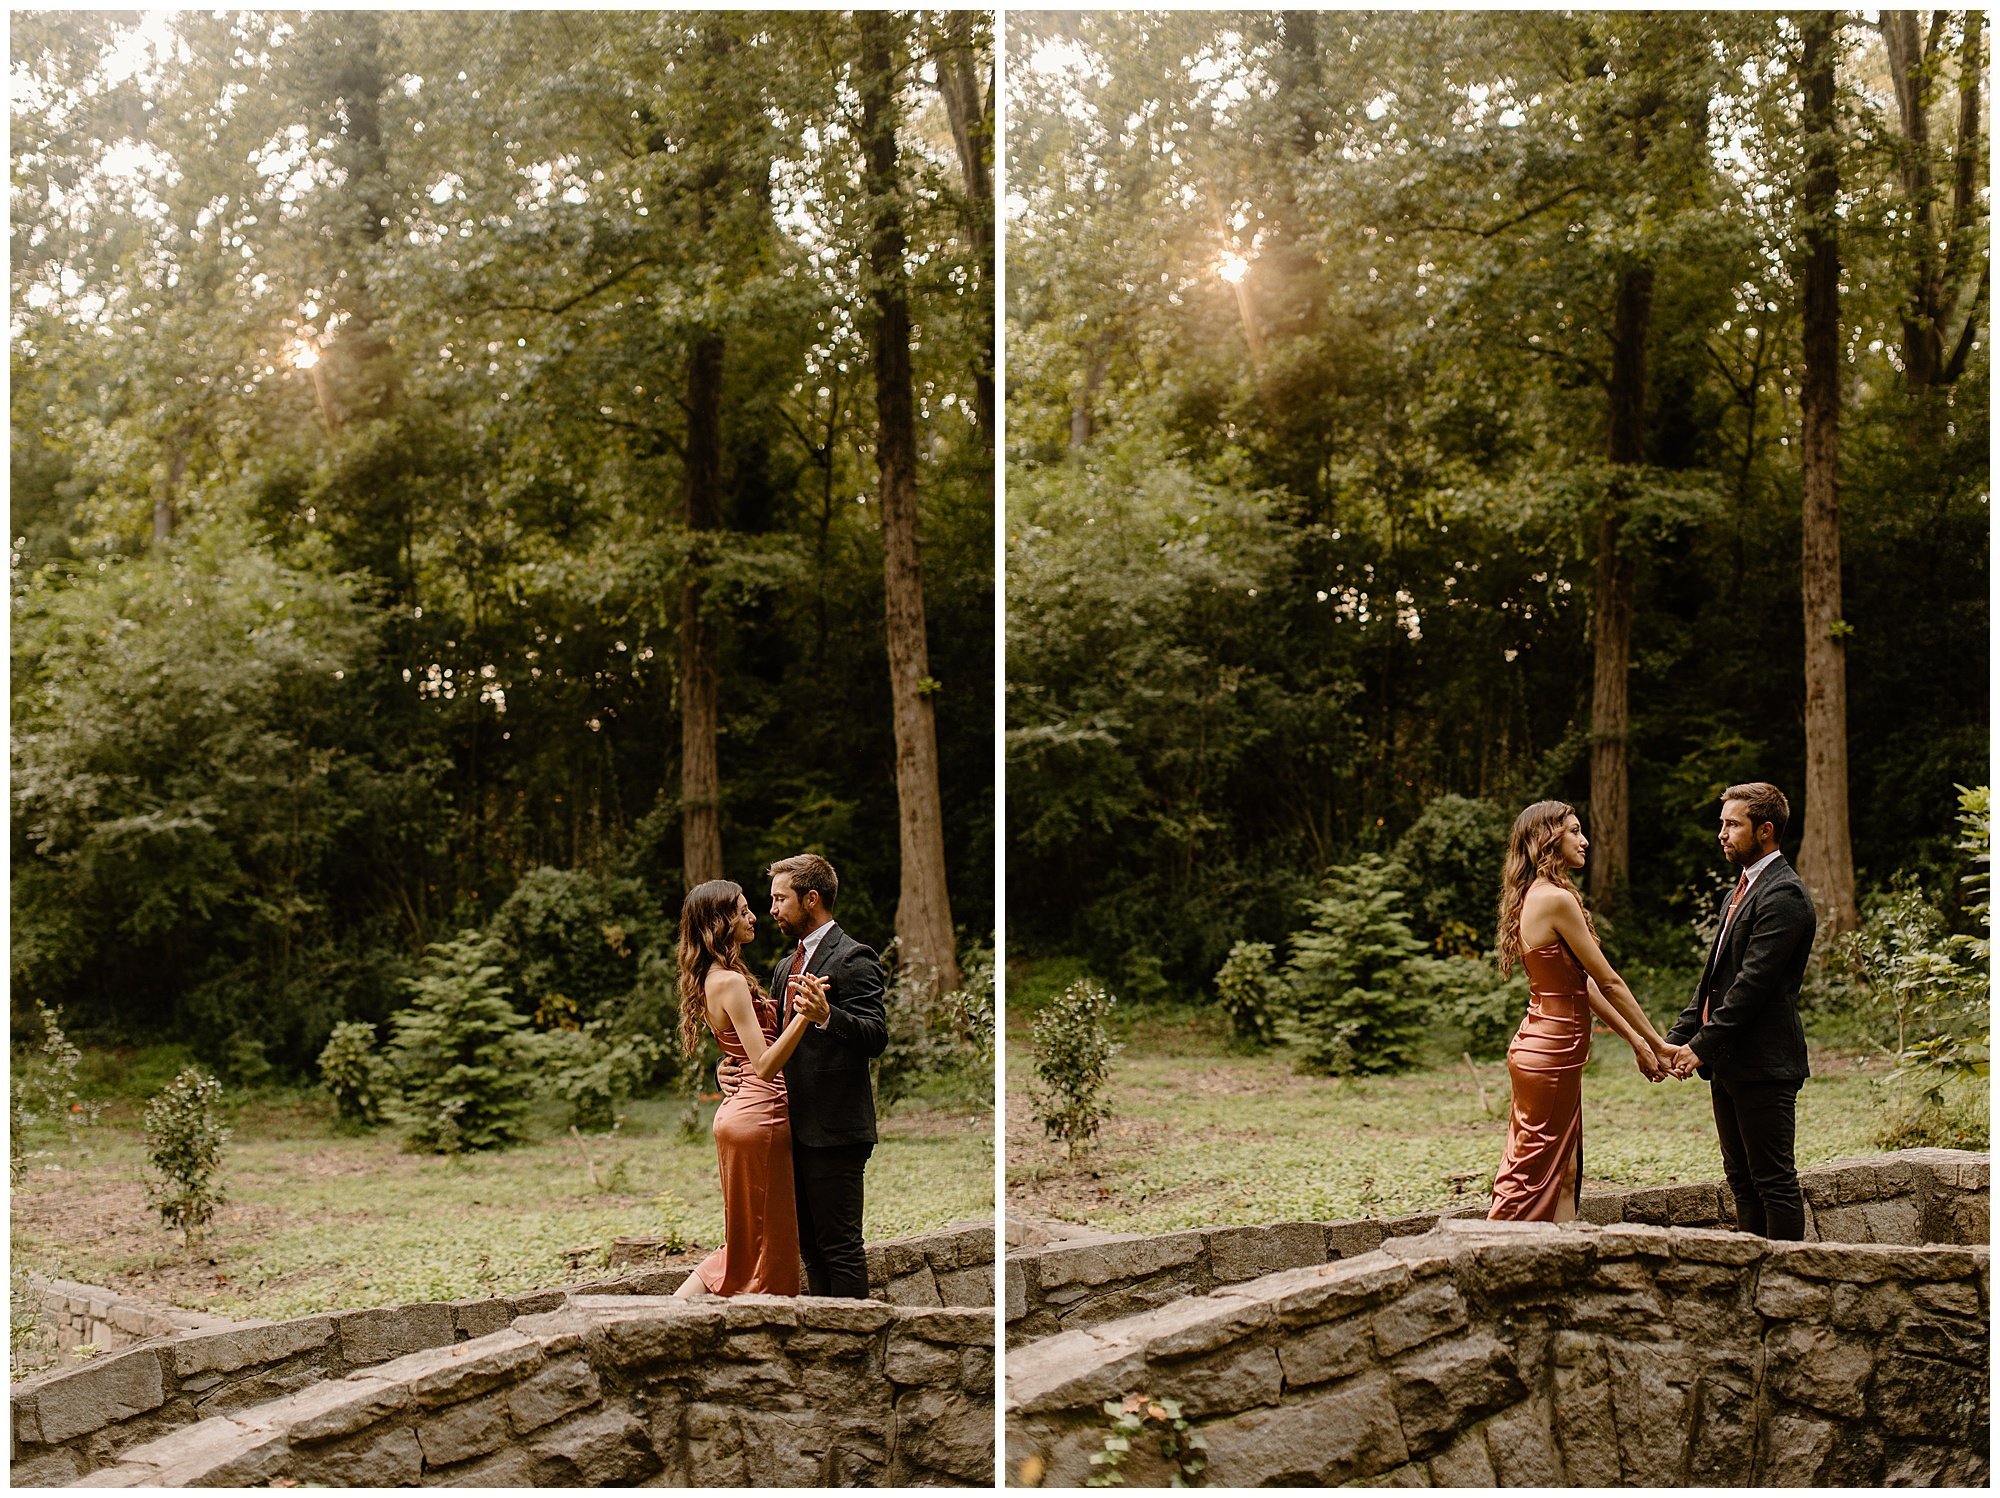 Cator Woolford Gardens, Cator Woolford Gardens Engagement, Atlanta Engagement Photographer, Atlanta Engagement/Wedding Photographer